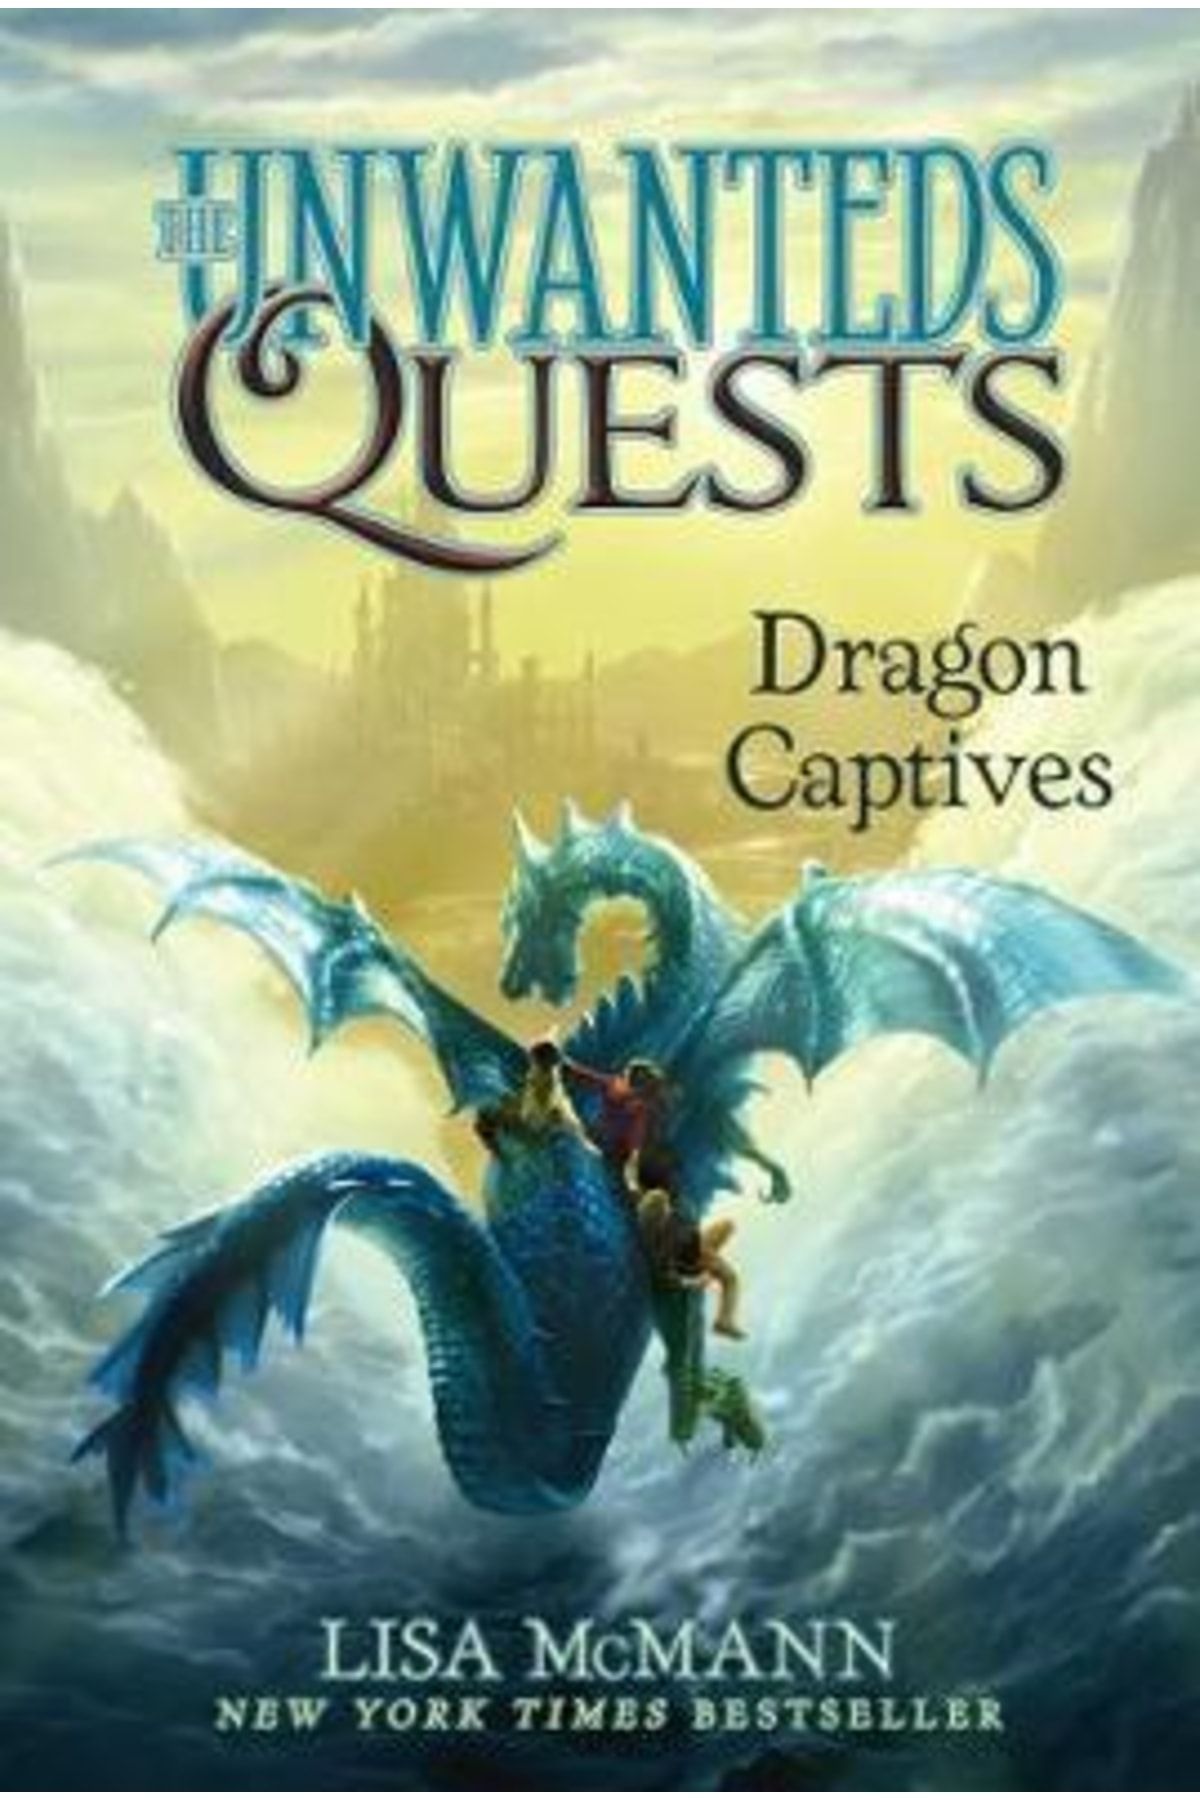 Aladdin Dragon Captives (unwanteds Quests 1)